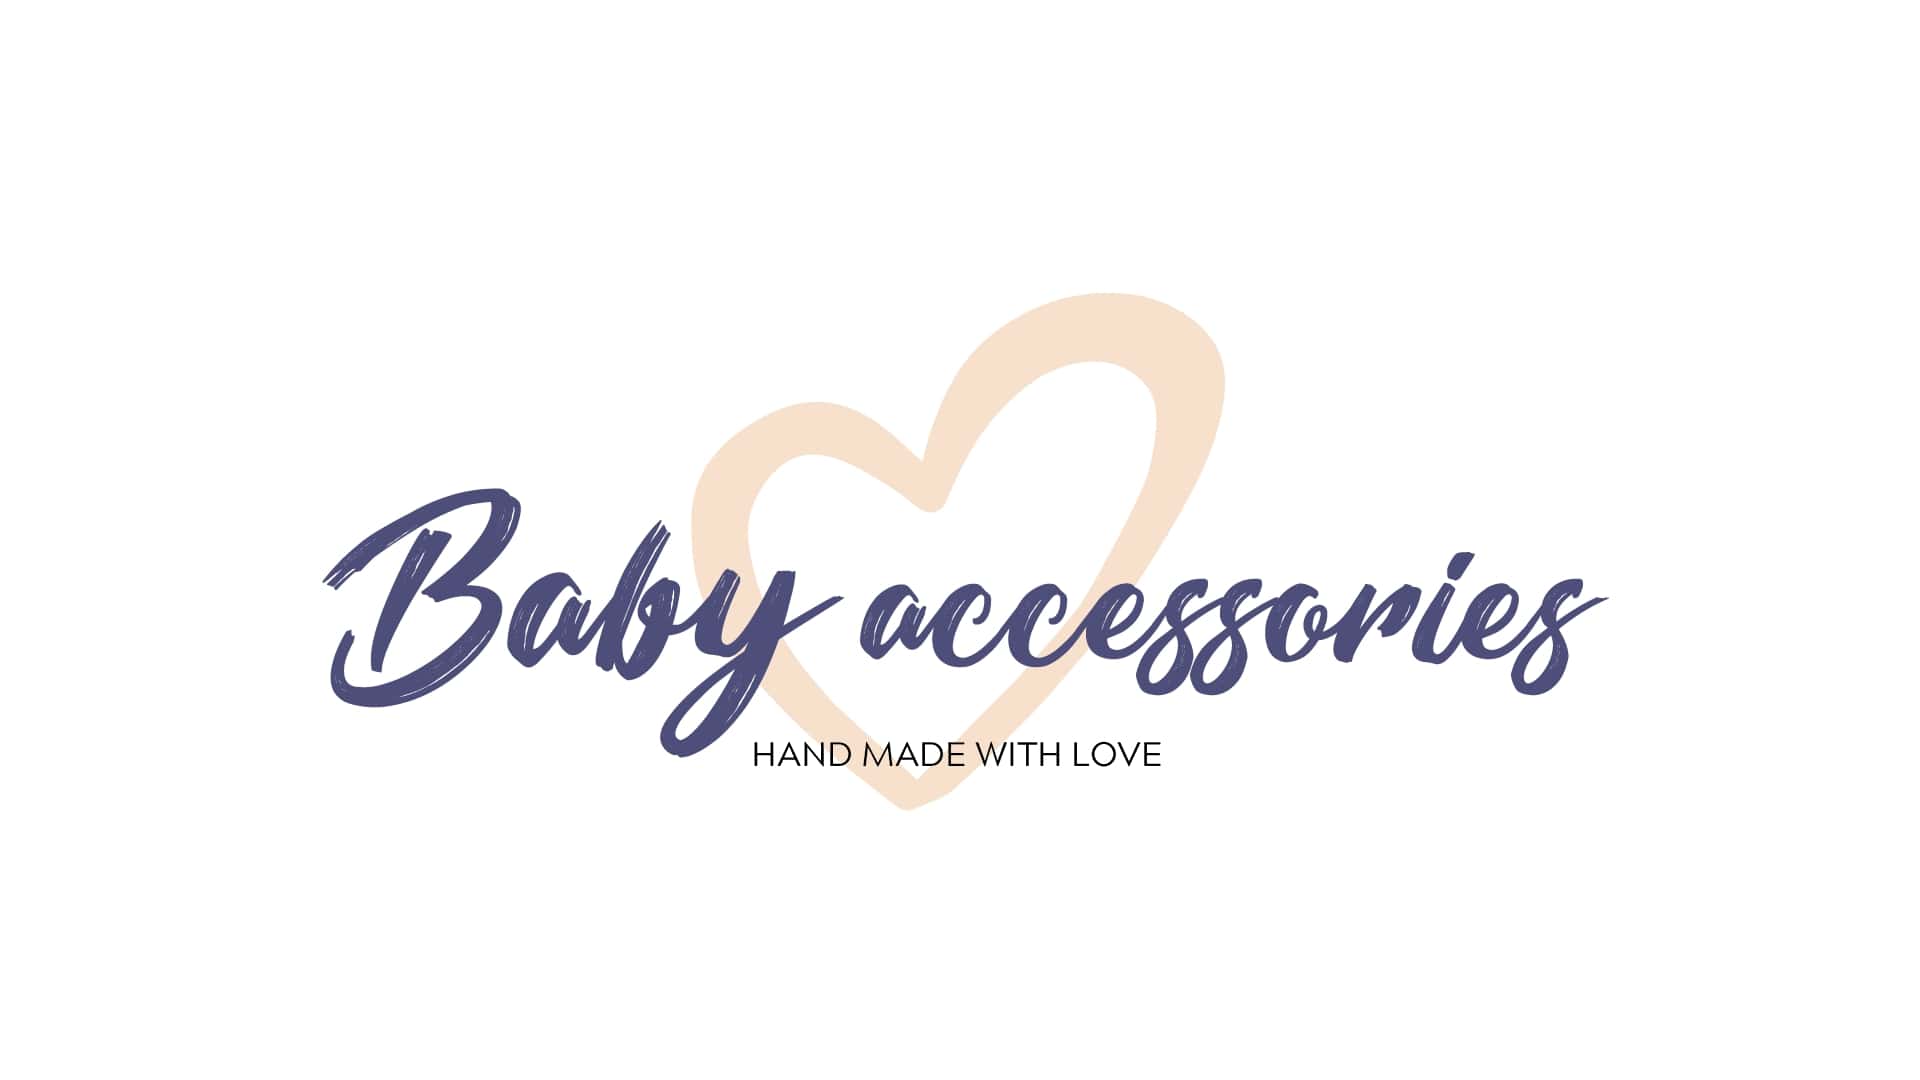 babyaccessories store image 1- jpeg